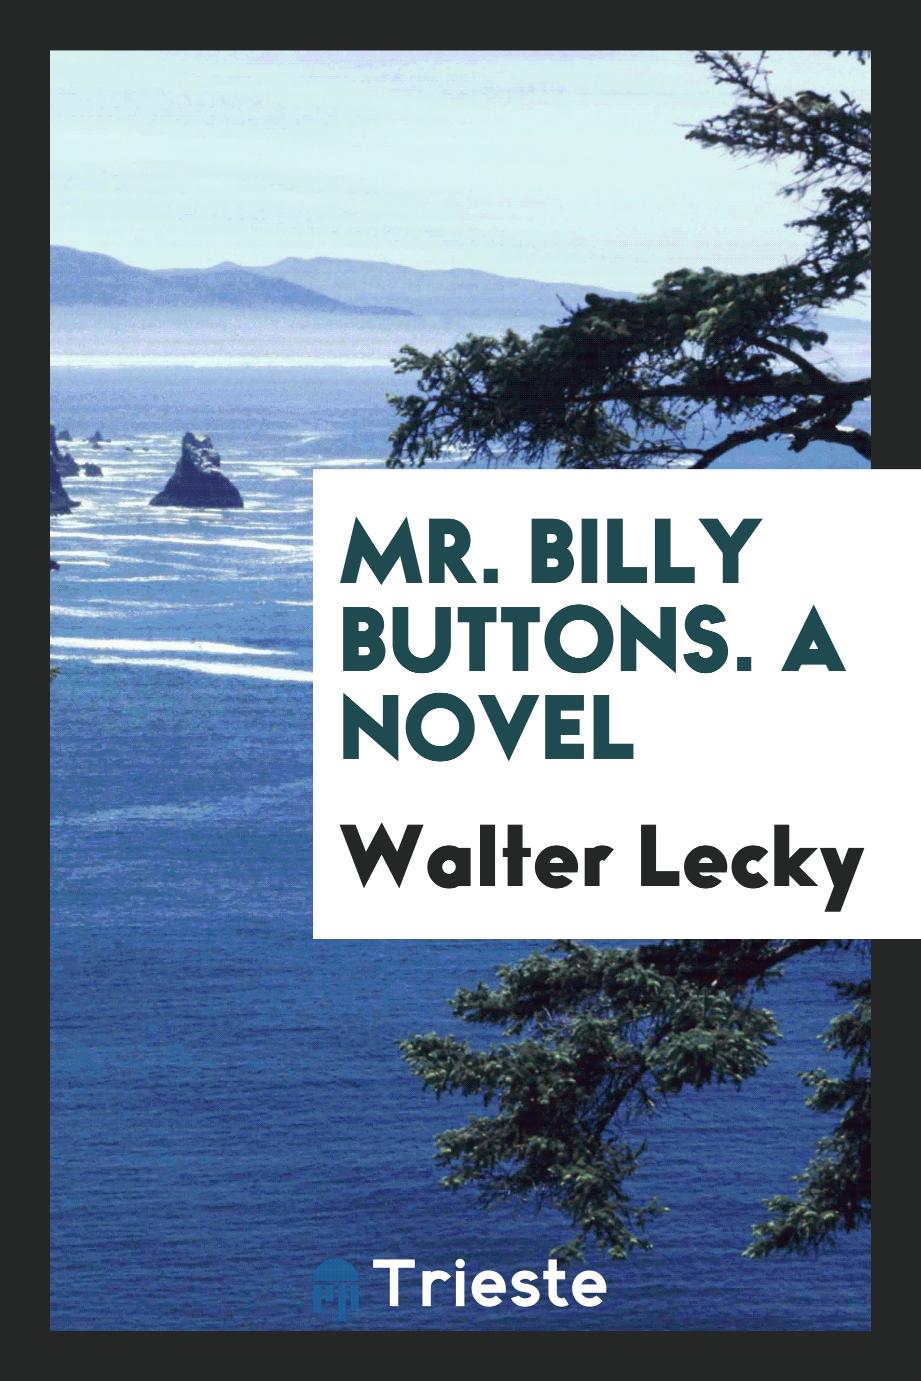 Mr. Billy Buttons. A novel